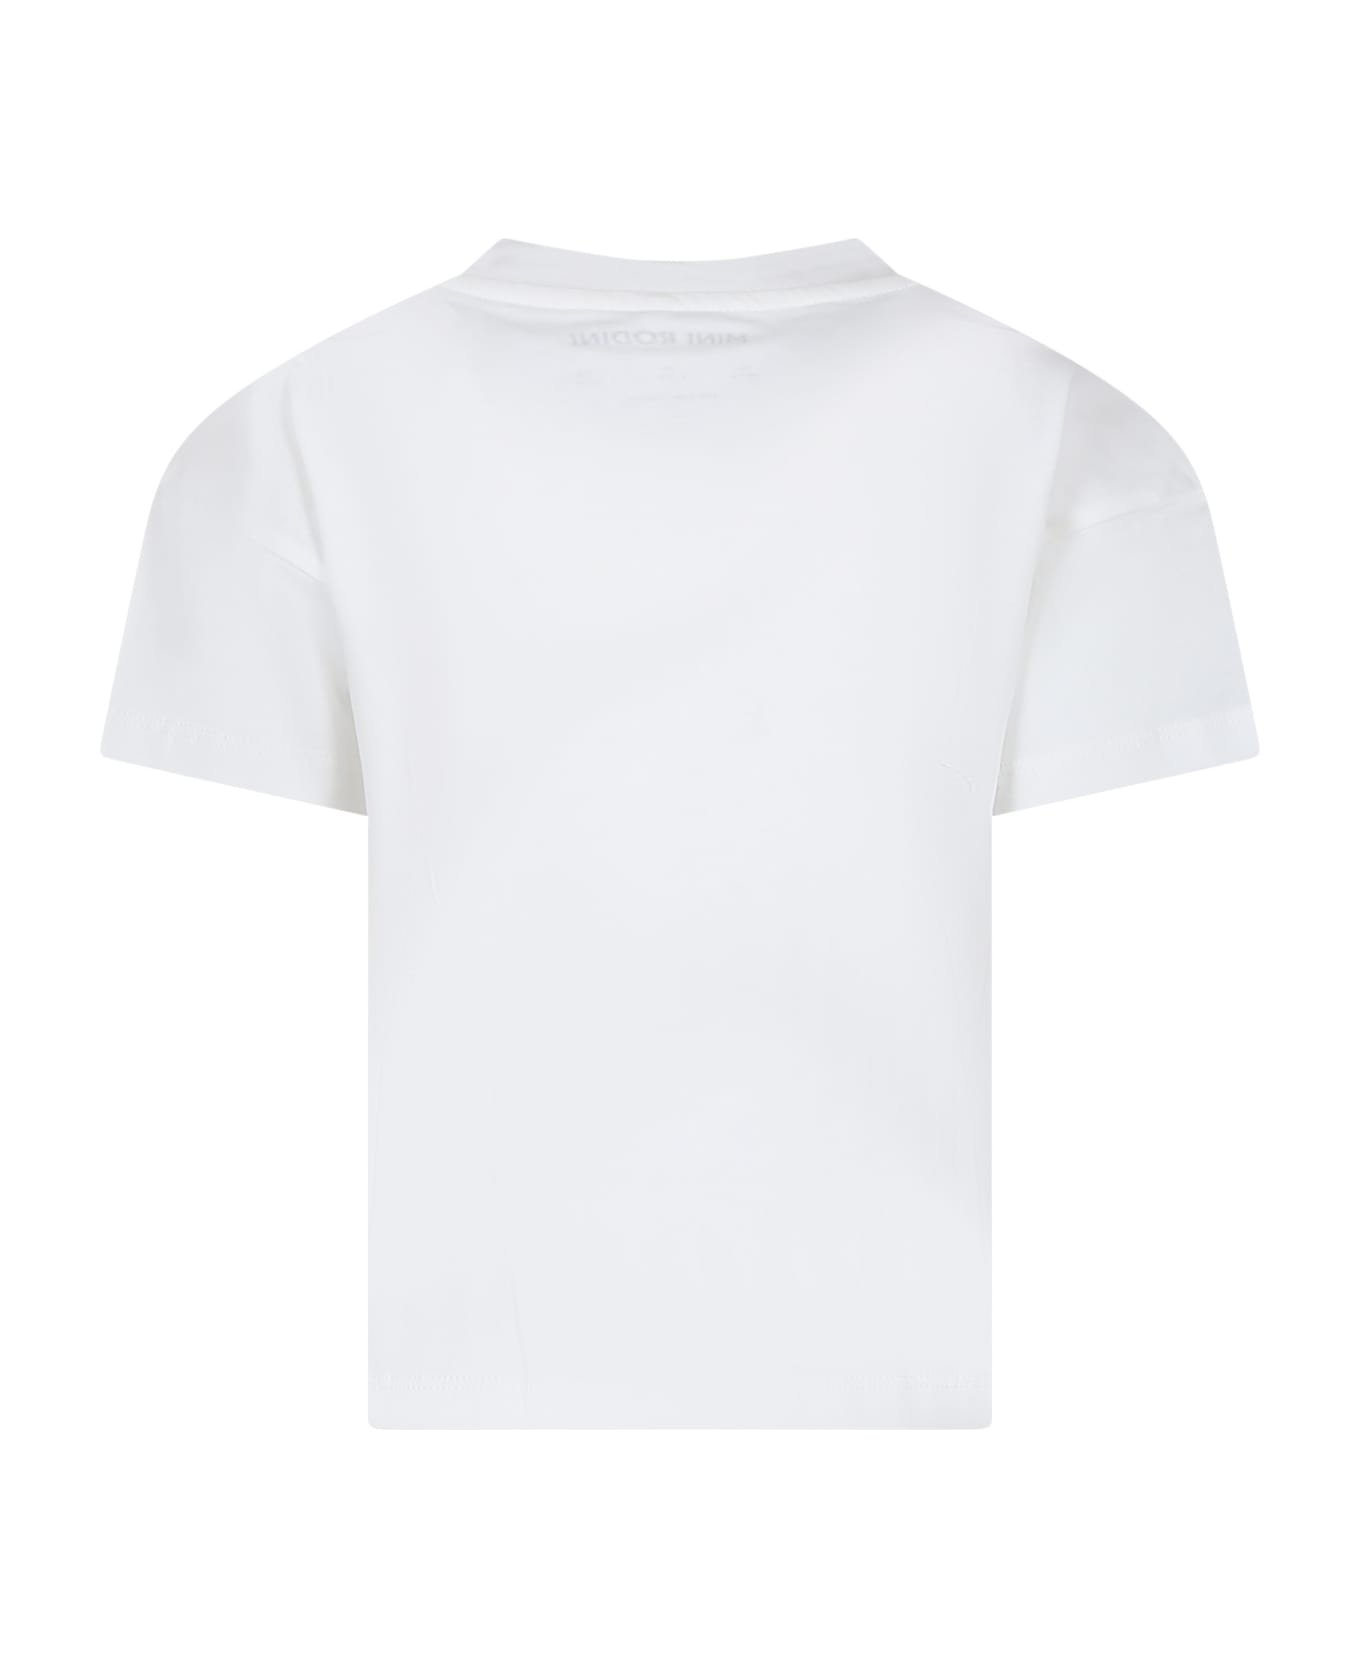 Mini Rodini White T-shirt For Kids With Basketball - White